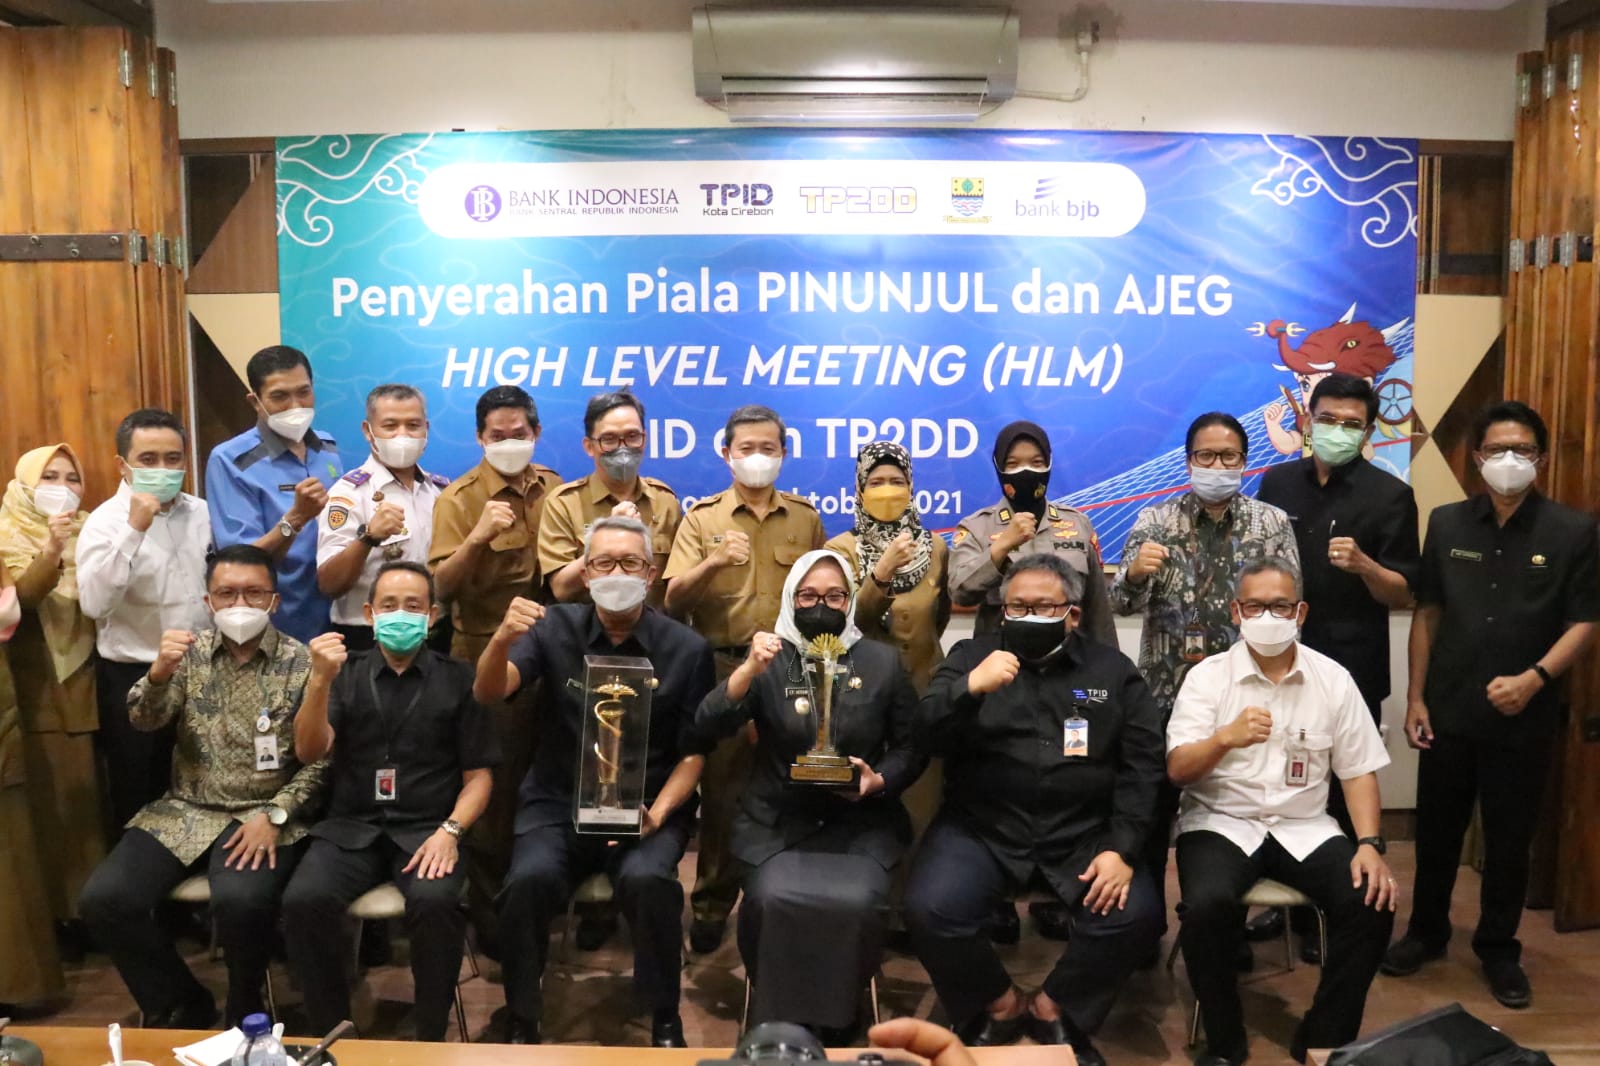 Pemkot Cirebon Raih Penghargaan Ajeg dan Pinunjul